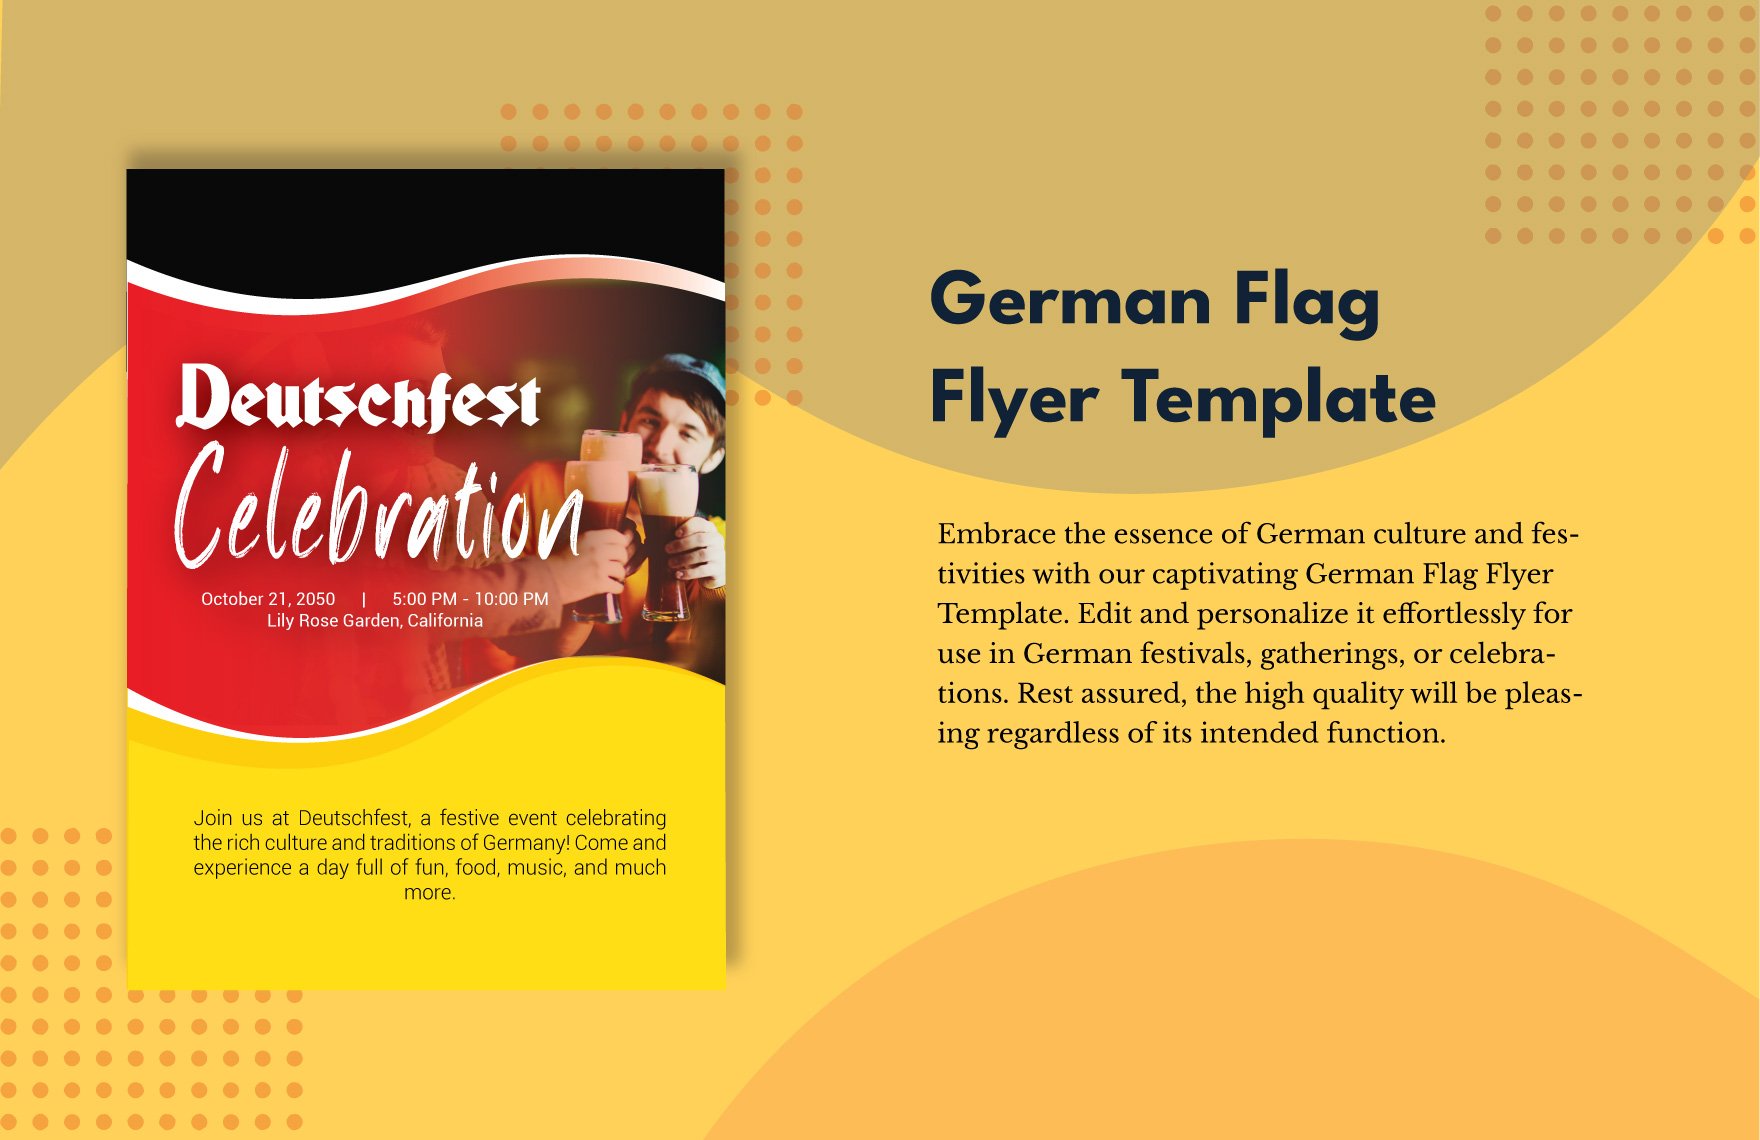 German Flag Flyer Template